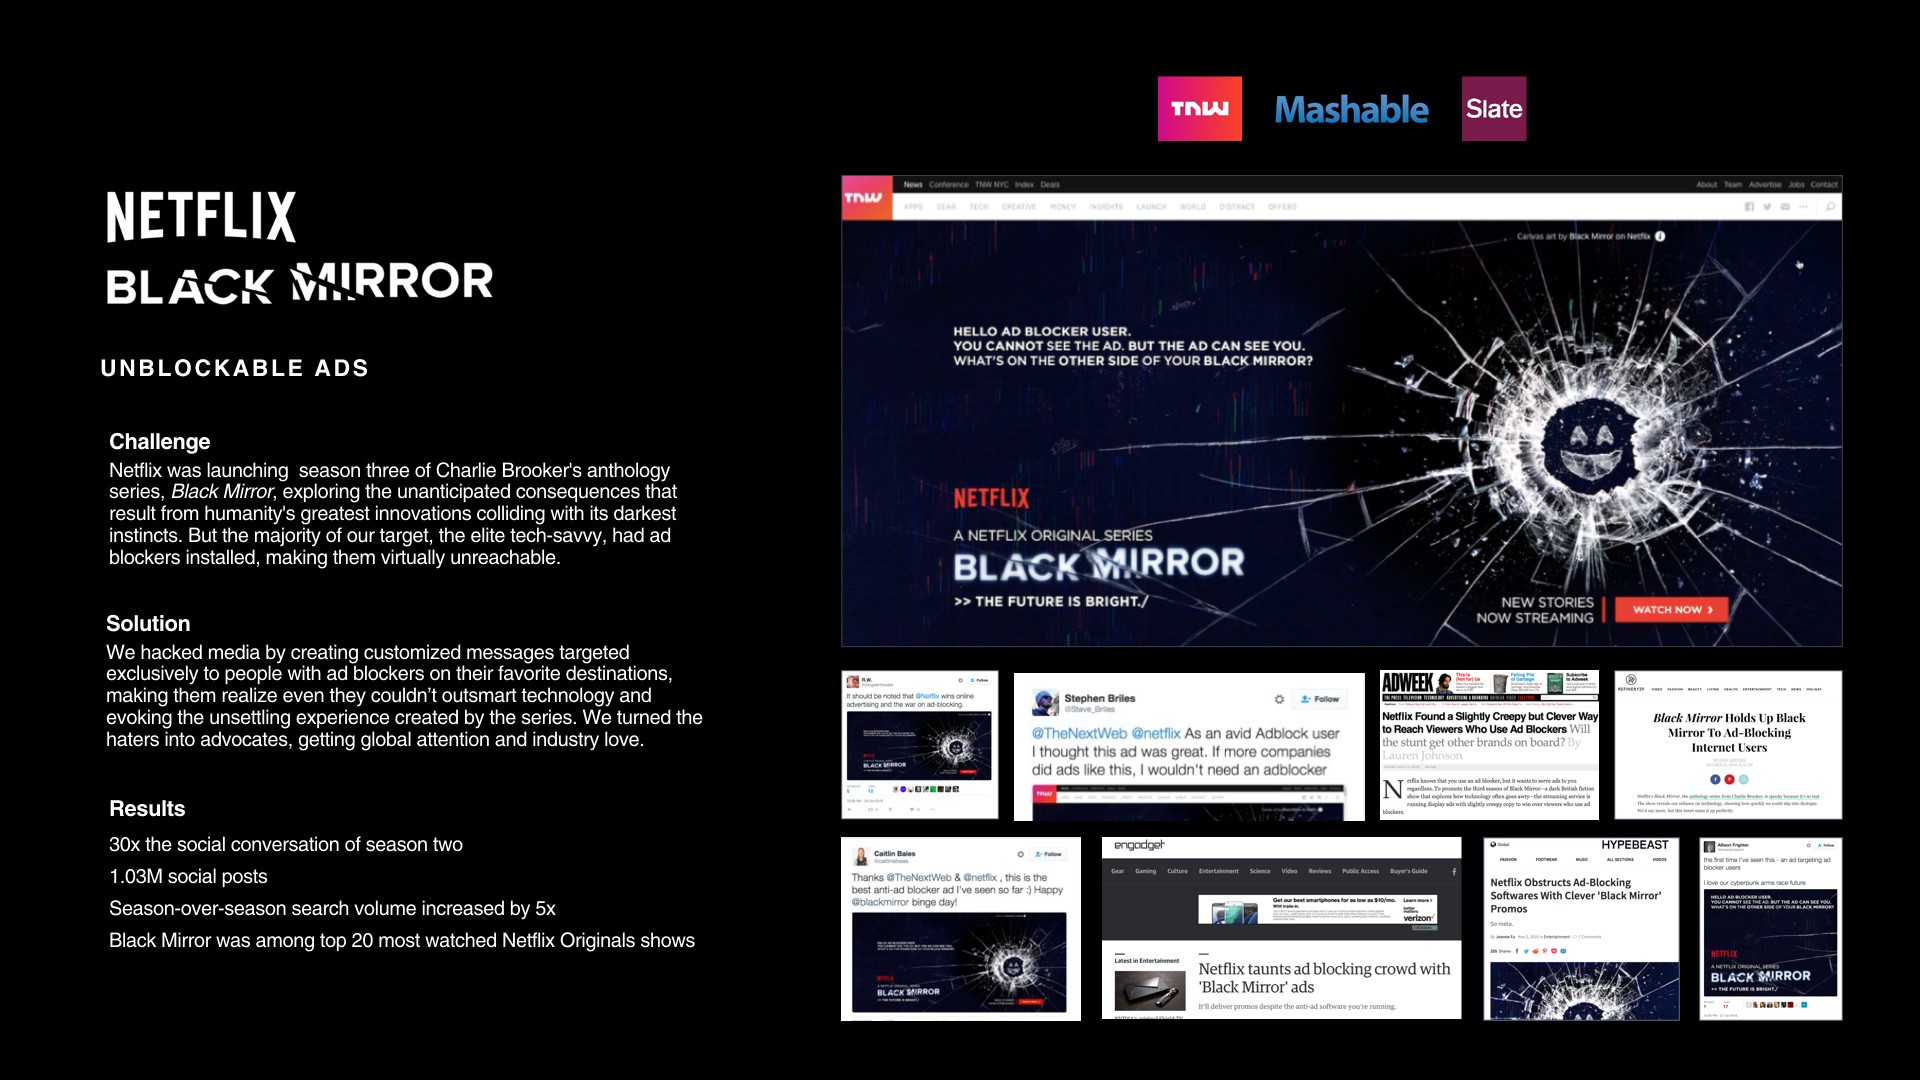 Black Mirror: Unblockable Ads